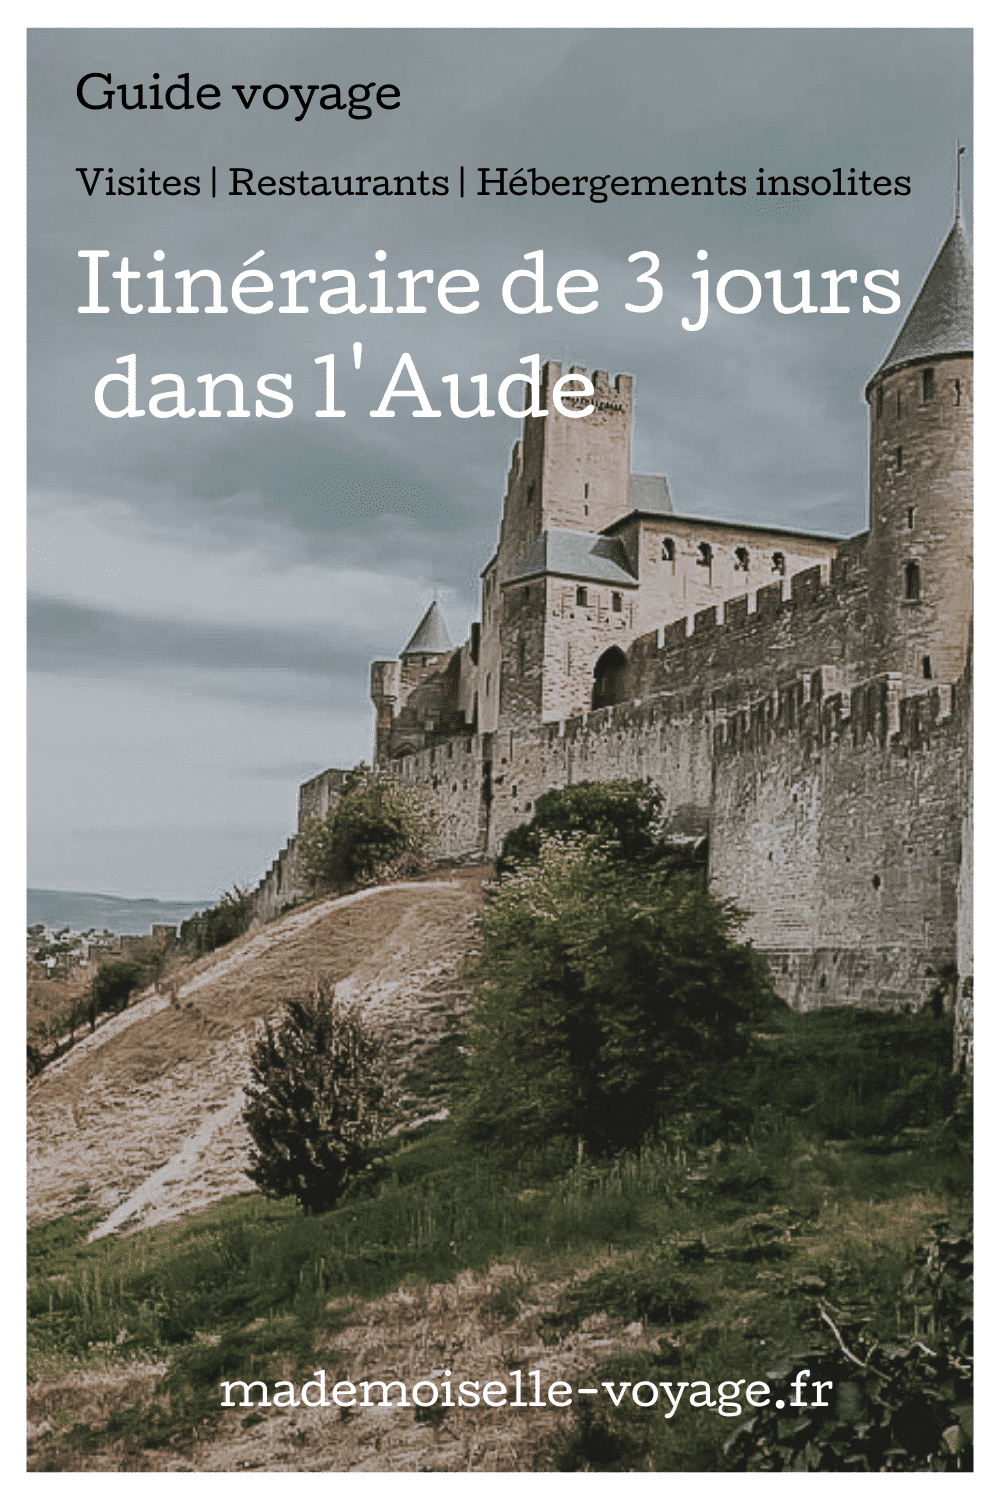 France| Aude | Carcassonne | conseils | voyage | mafemoiselle-voyage